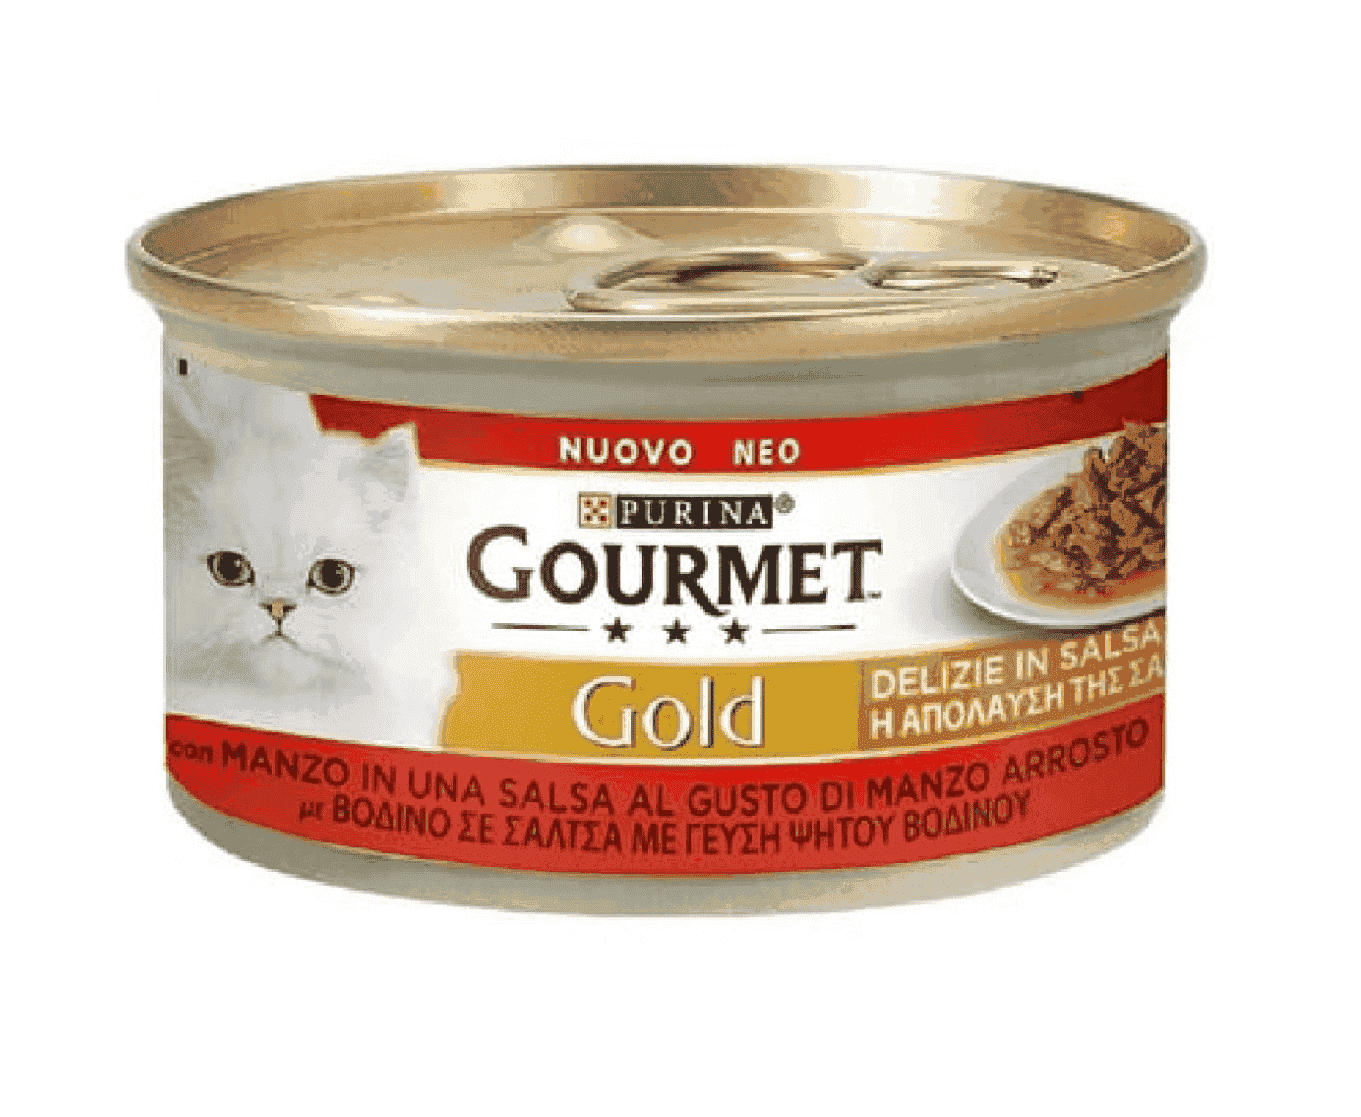 کنسرو گربه گورمت Gourmet گلد با طعم گوشت گوساله وزن